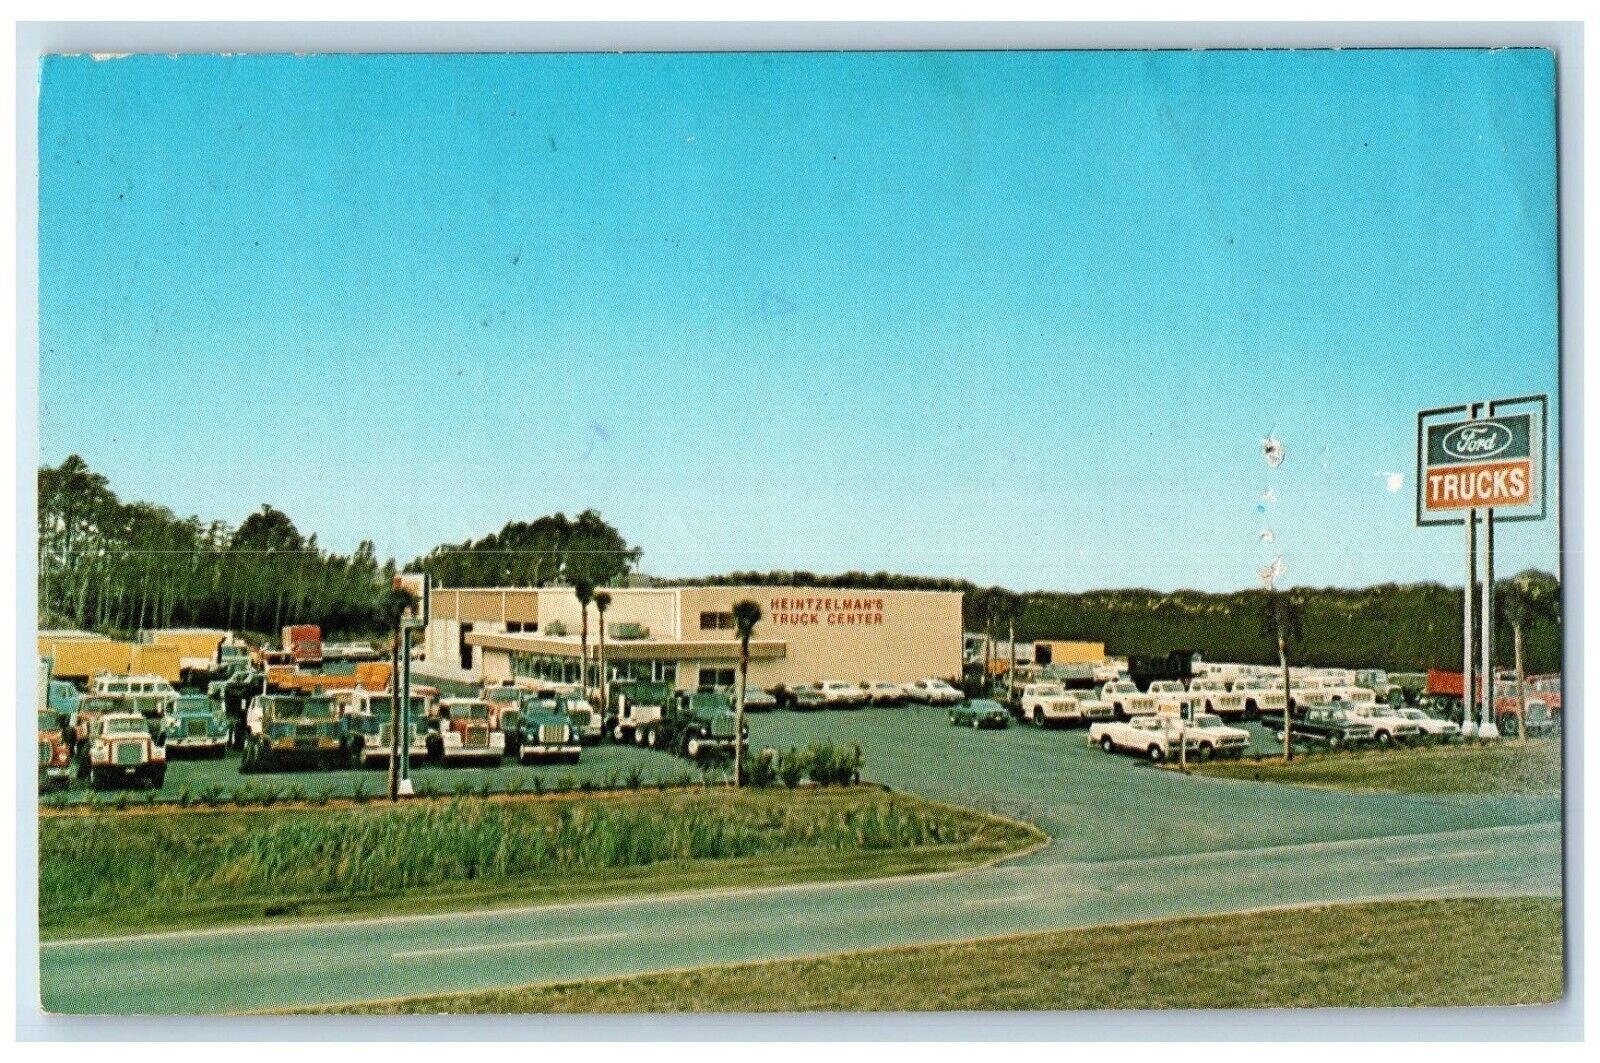 Ford Trucks Heintzelman\'s Truck Center Inc. Orlando Florida FL Vintage Postcard